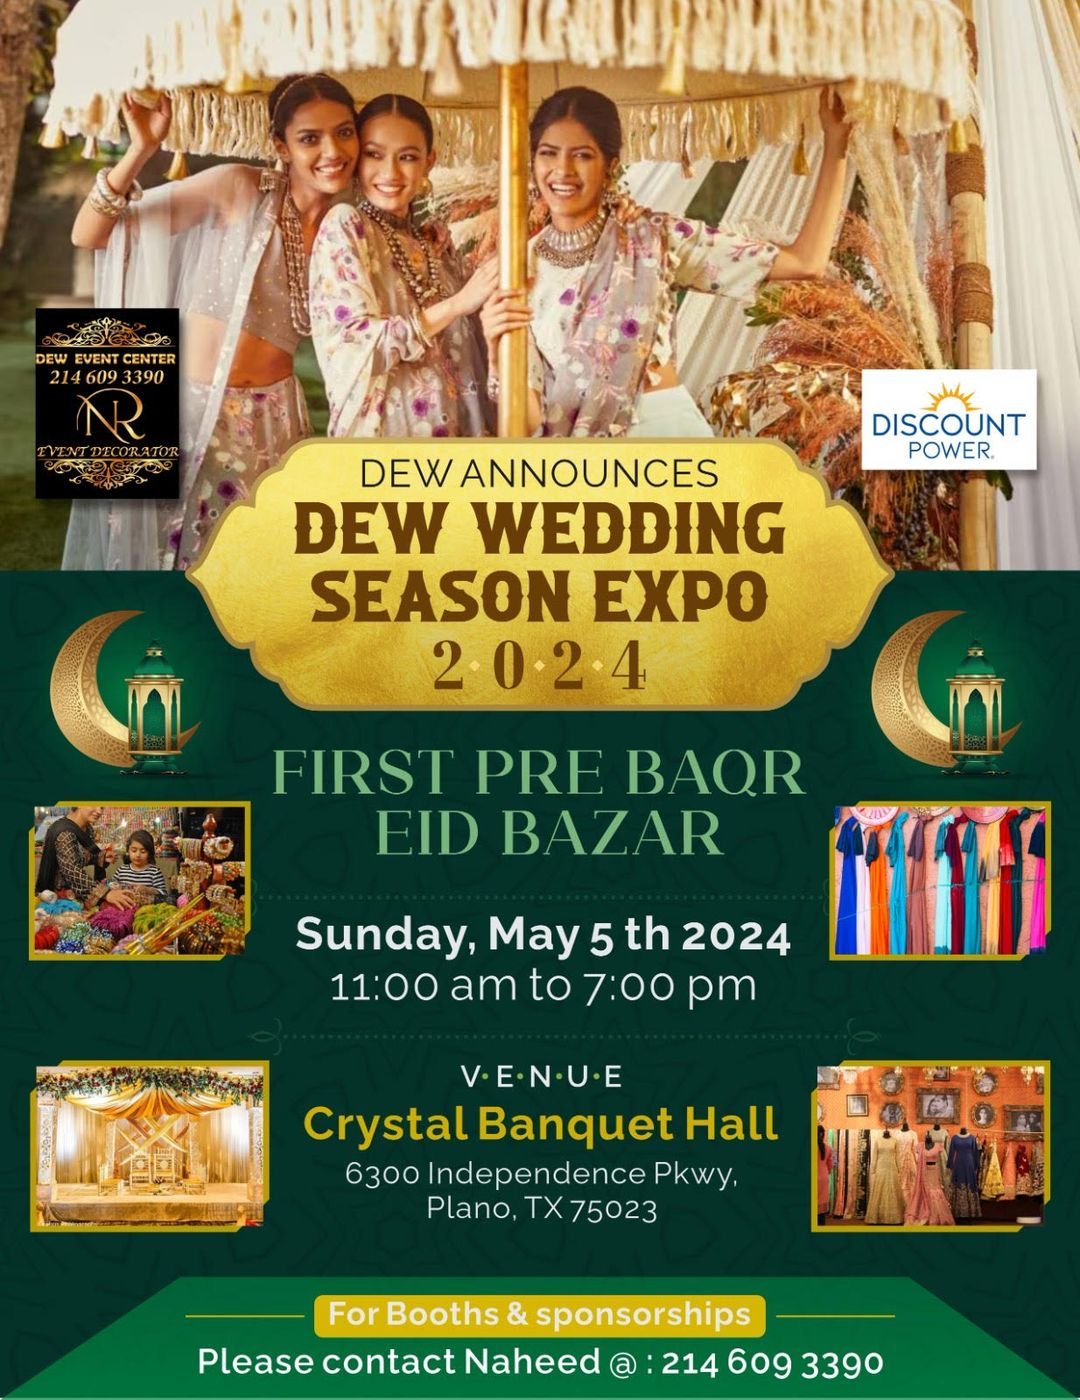 DEW WEDDING SEASON EXPO